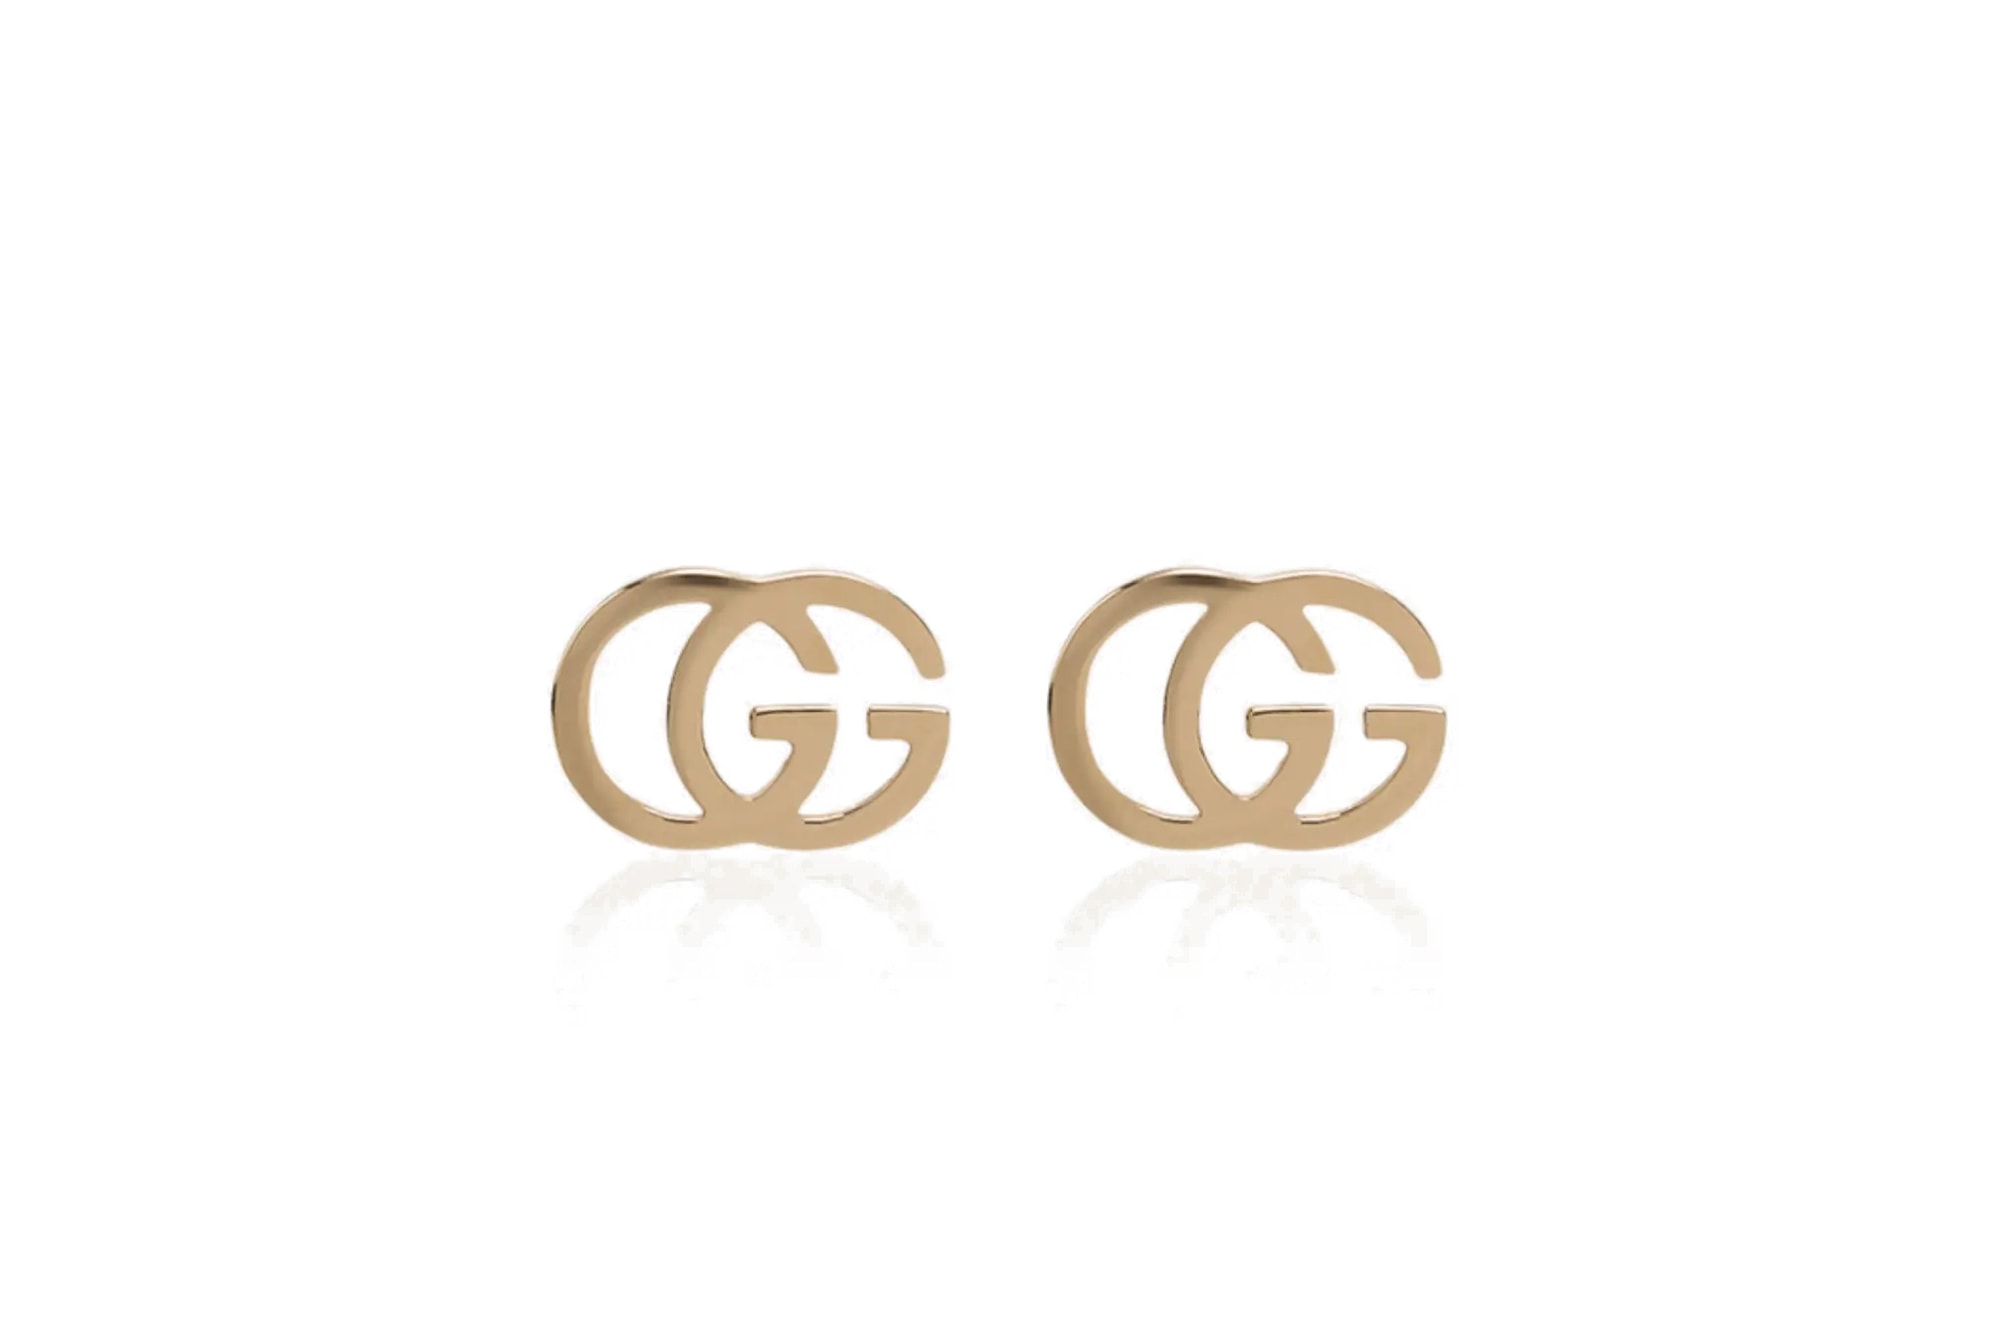 Gucci Gold Logo Earrings 18K Jewelry Piece Luxury Accessories Statement Everyday Jewellery Studs 